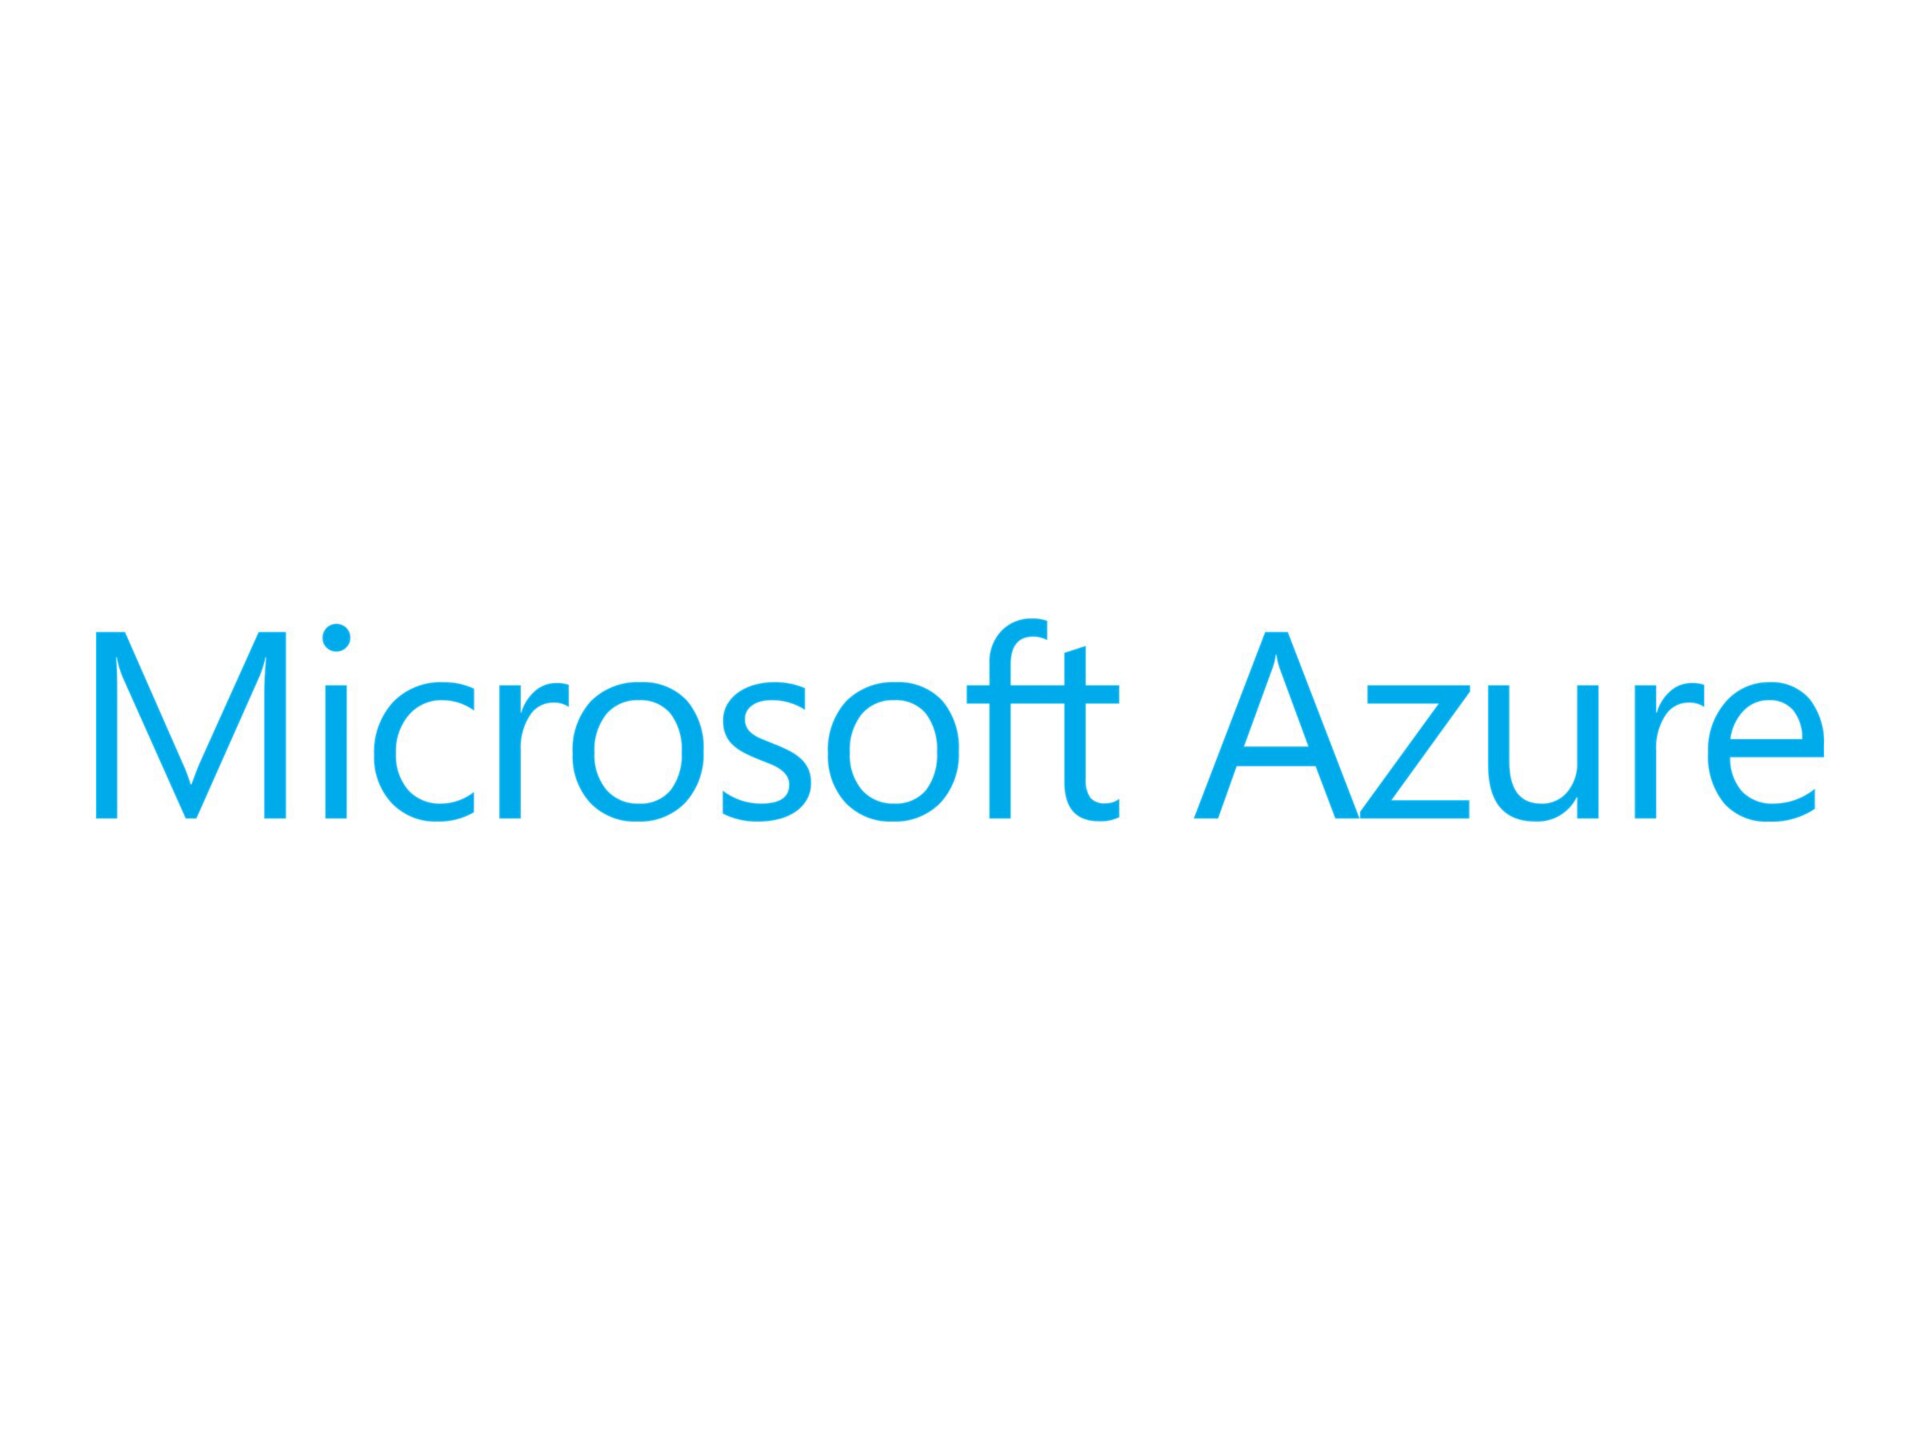 Microsoft Azure Networking - overage fee - 100 hours